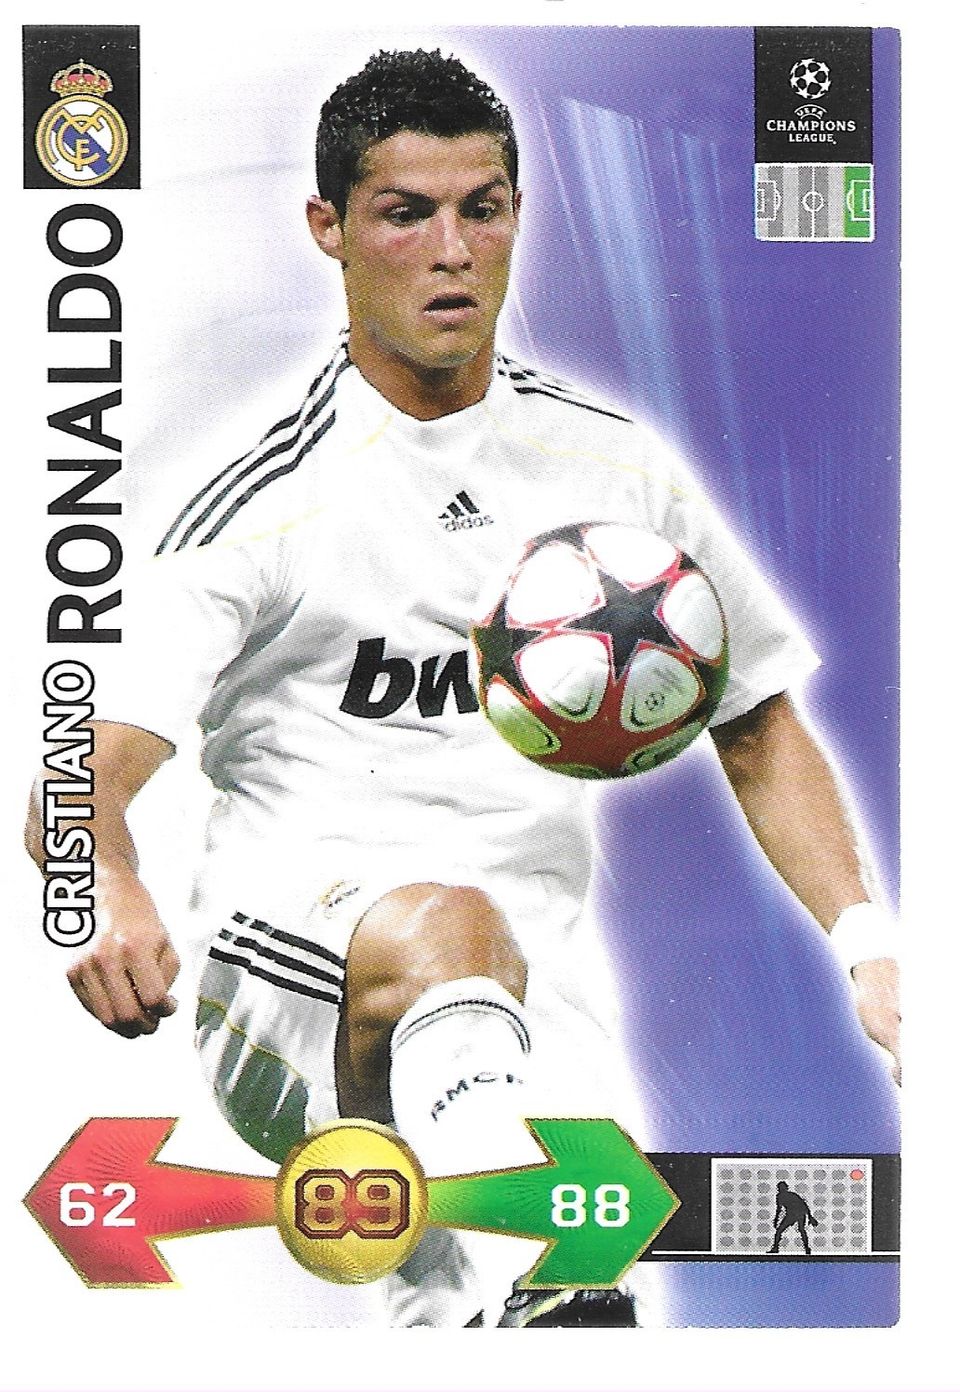 2009-10 Panini Champions League  Cristiano Ronaldo (Real Madrid CF)